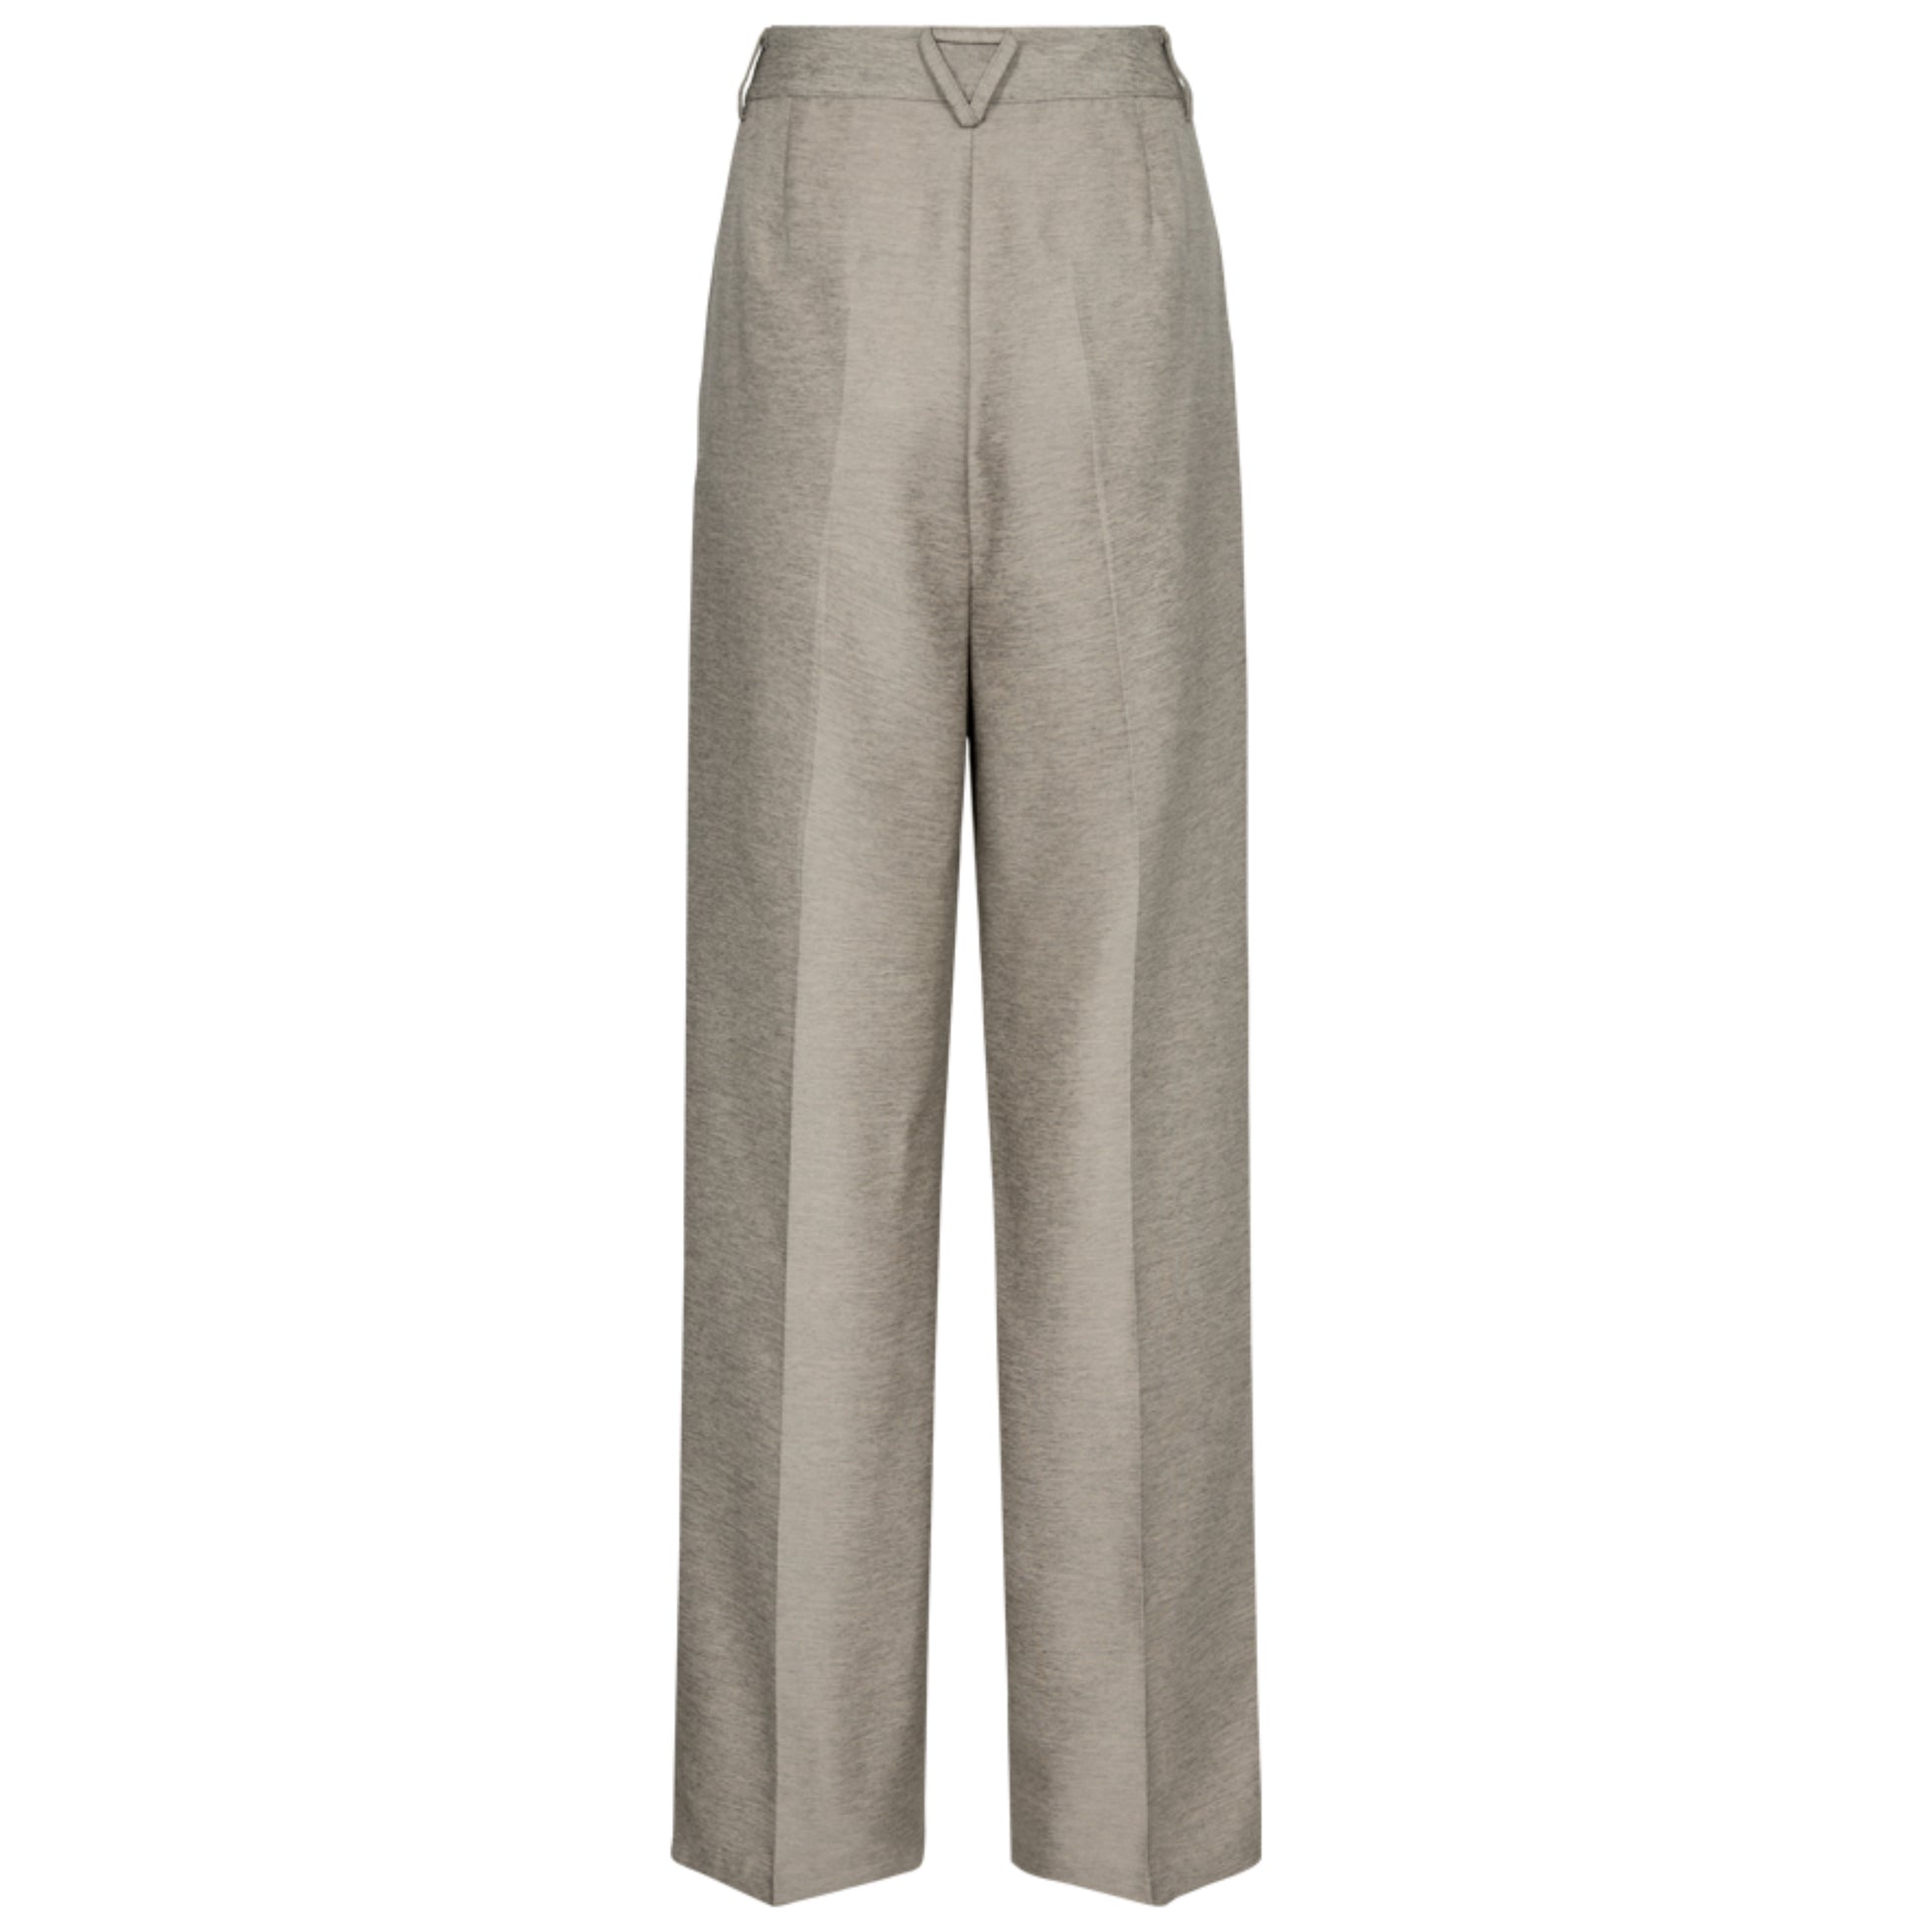 Copehage Muse Cilly Pants Shiny - Peet kleding